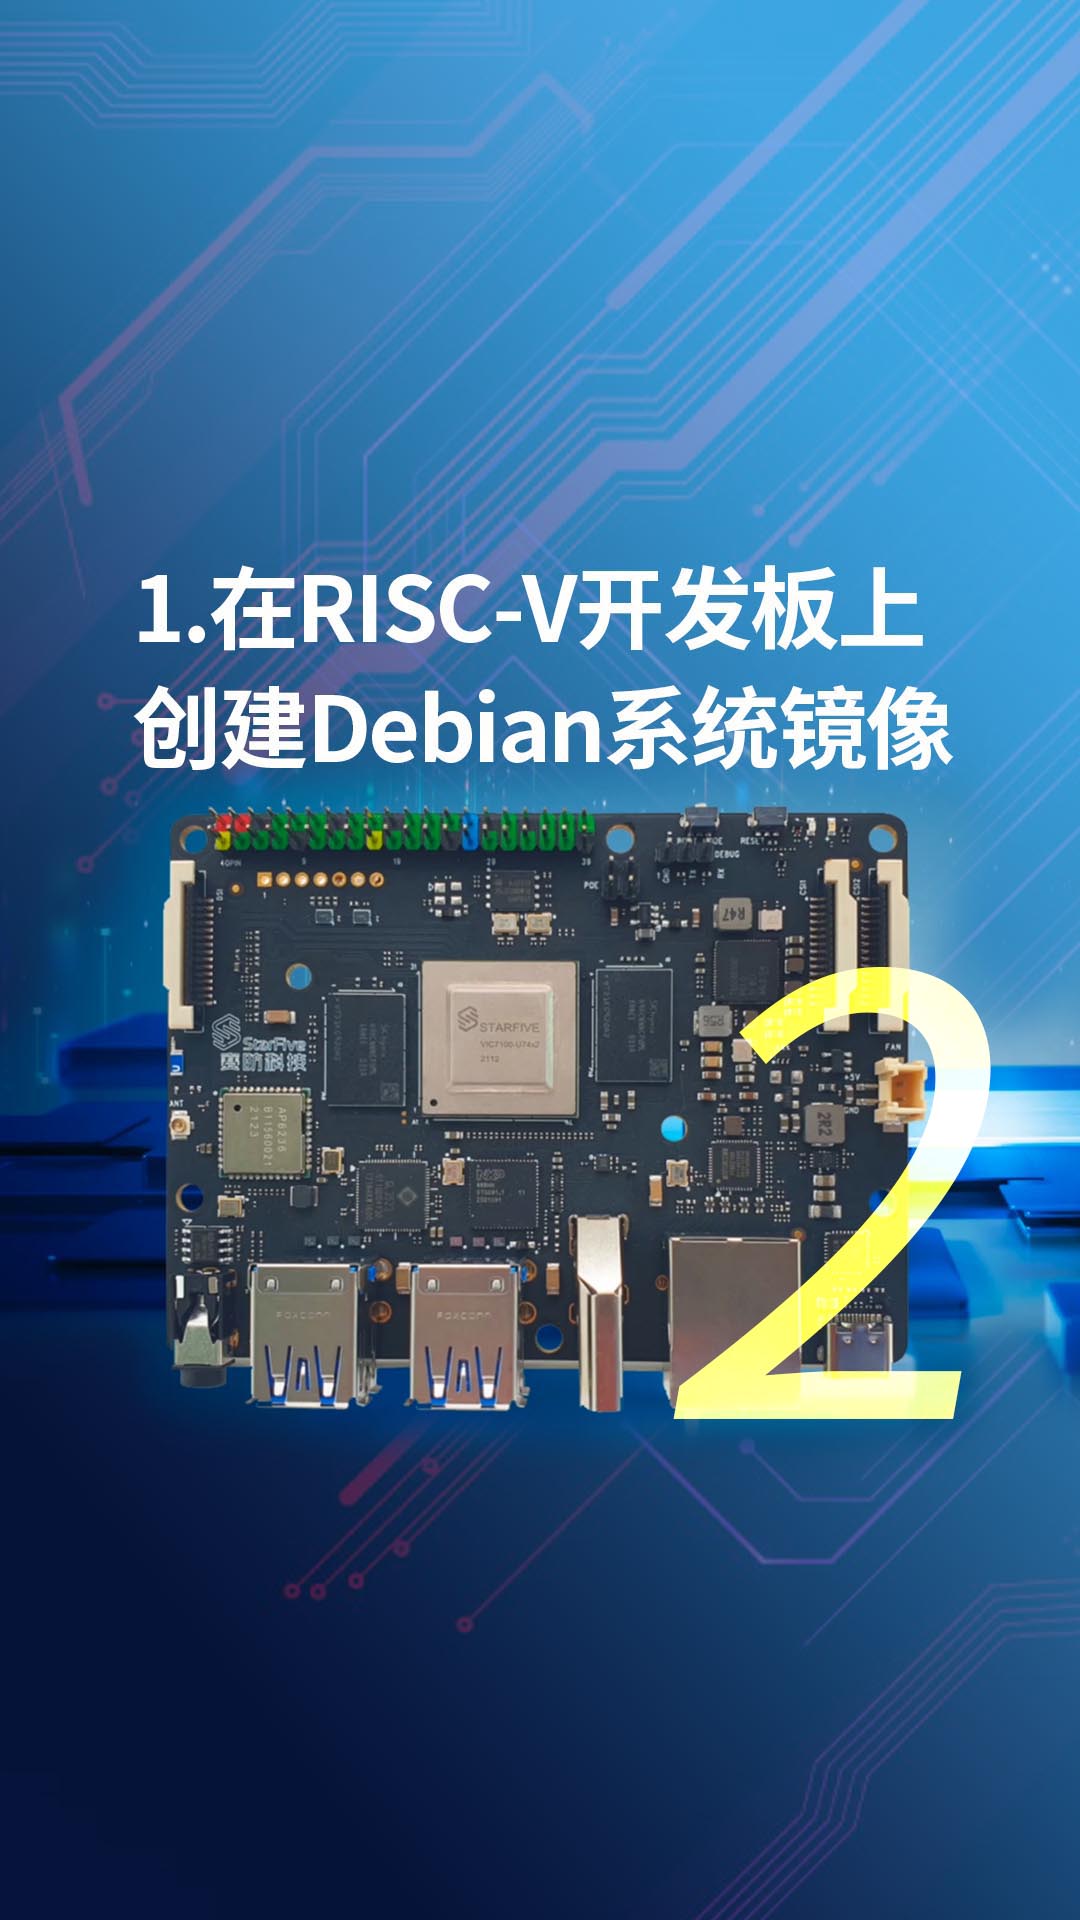 1-在RISC-V开发板上创建Debian系统镜像2.